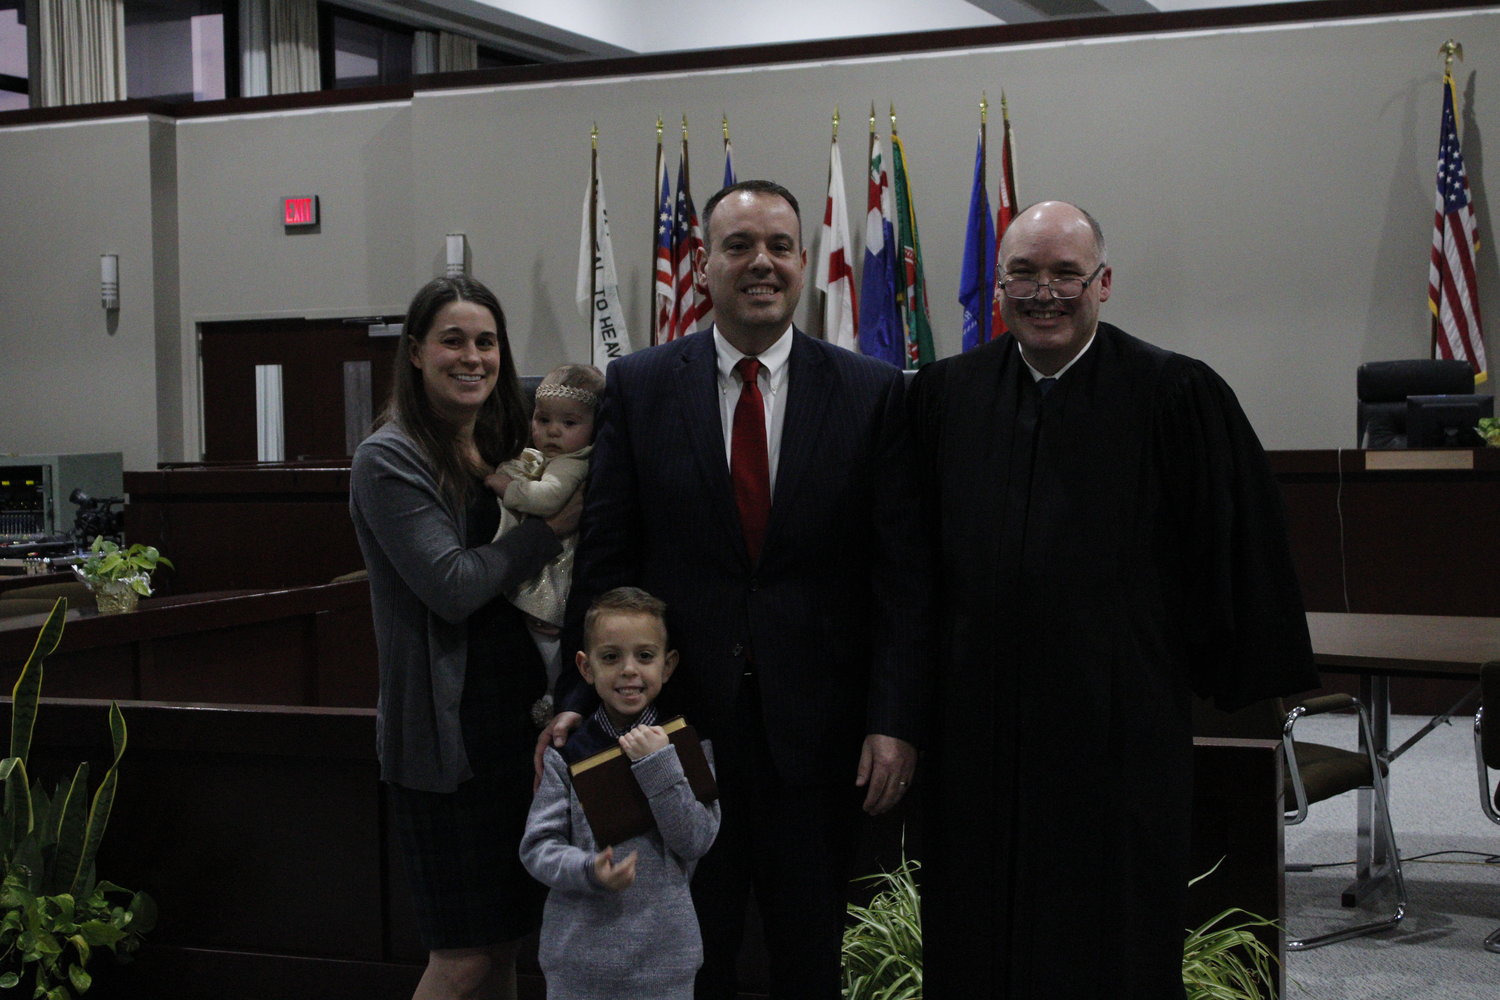 6th District Councilman Dan Panico with his family and Hon. James Hudson.